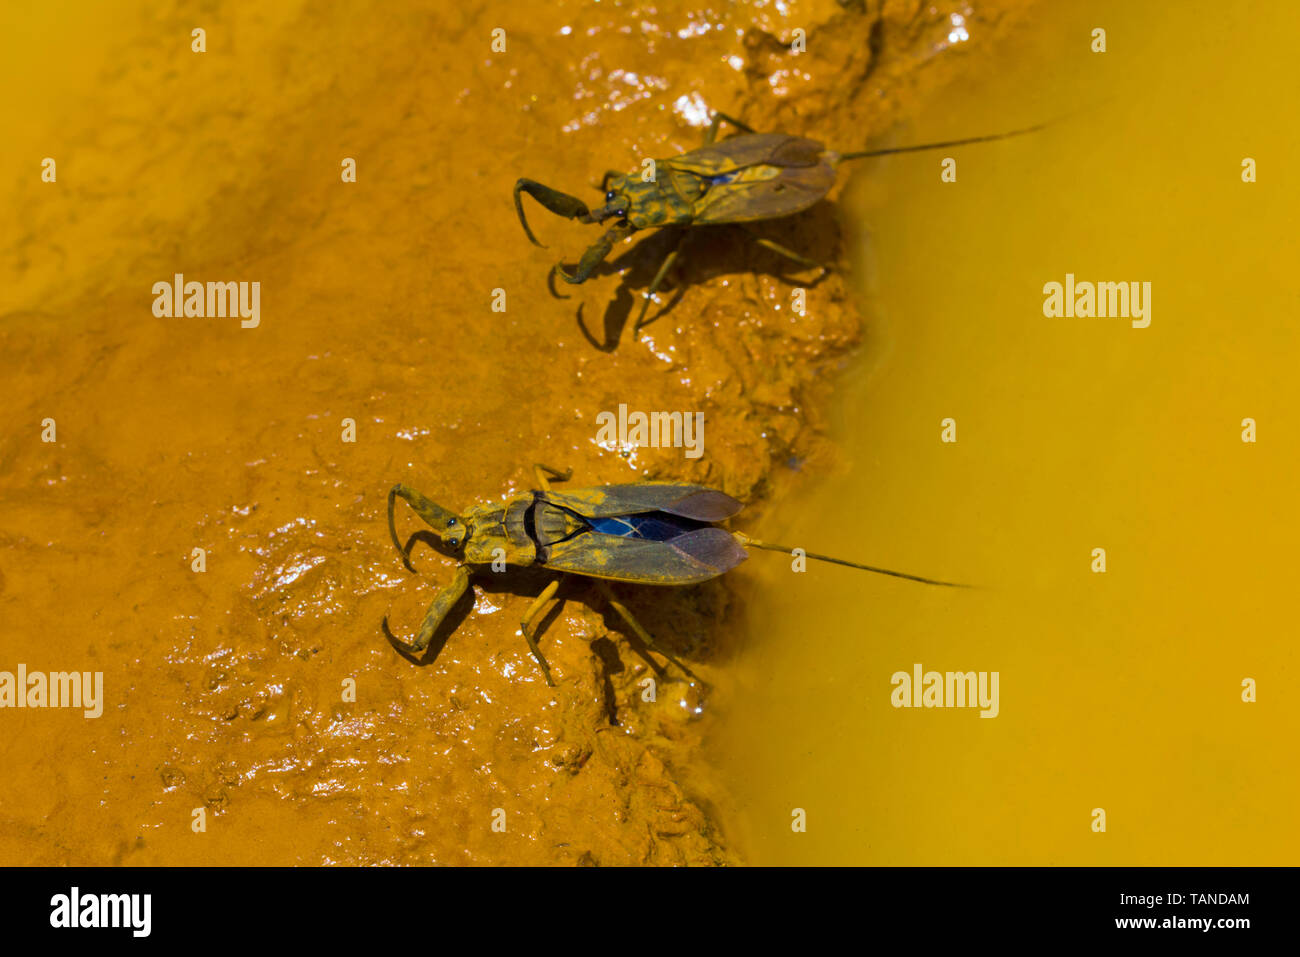 Water scorpion, Heteroptera, Amboli, Sawantwadi, Maharashtra, India. Stock Photo